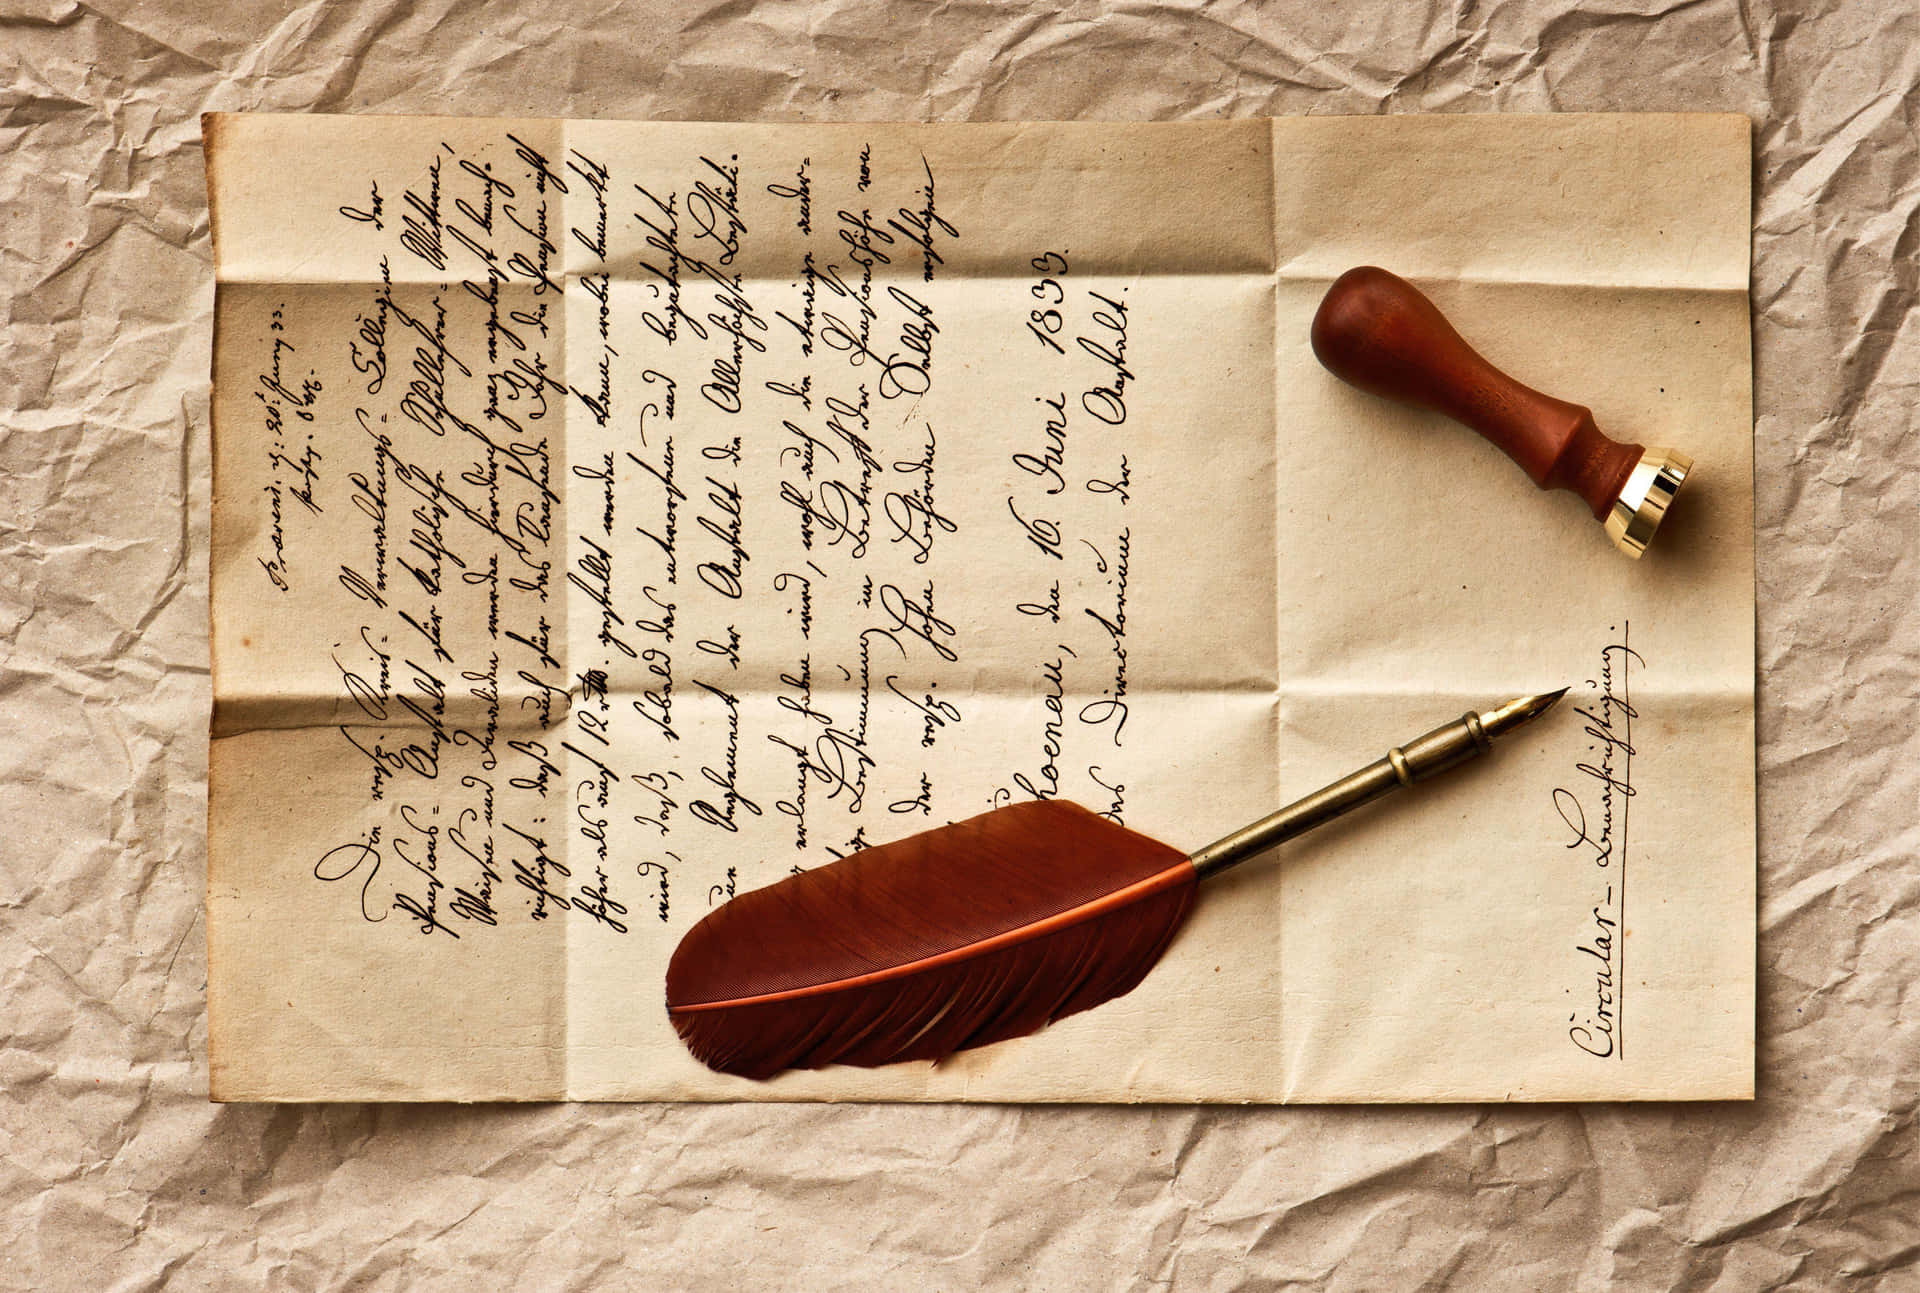 500+ Free Handwriting & Writing Images - Pixabay